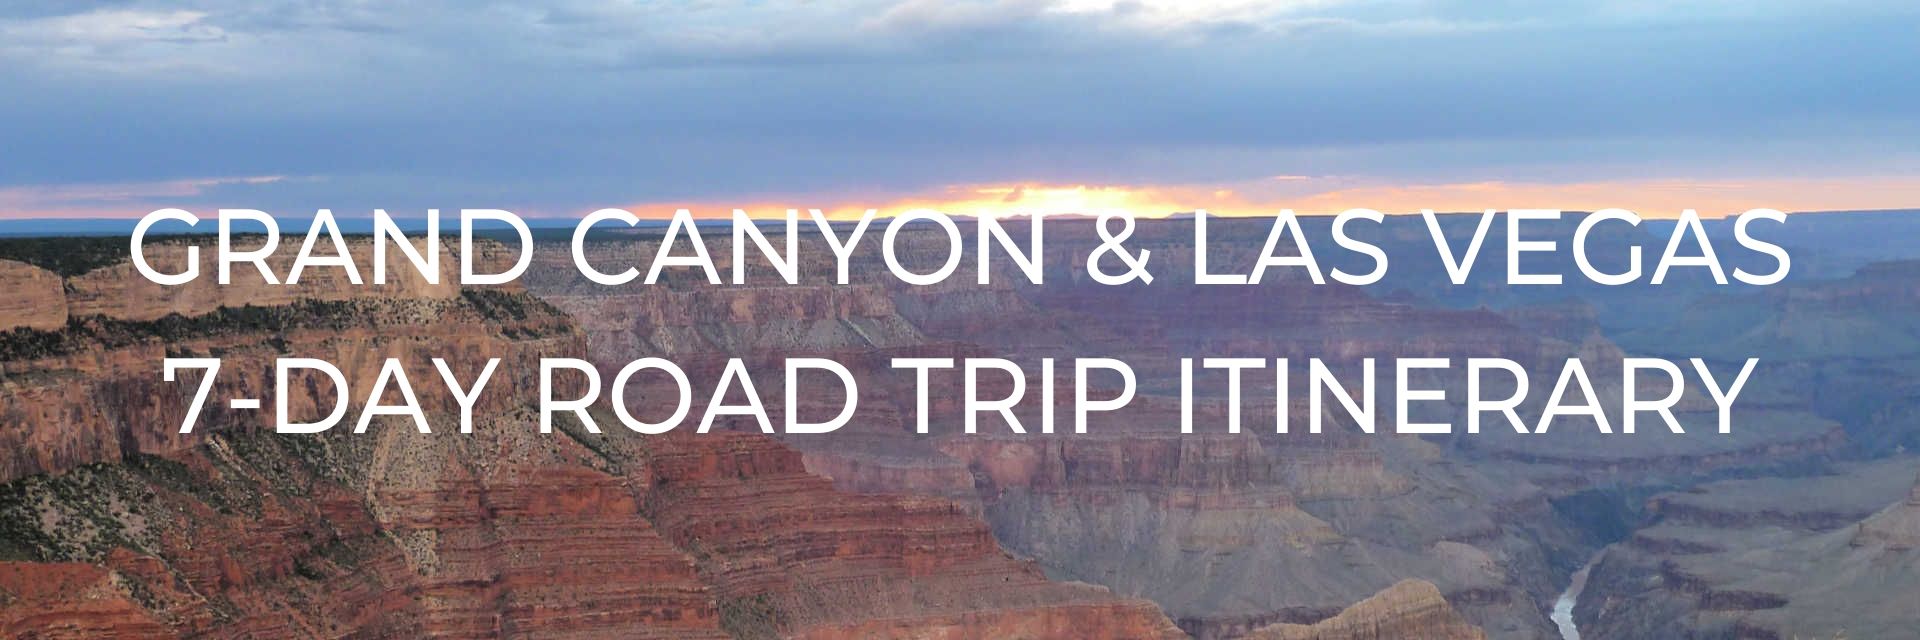 Grand Canyon & Las Vegas Itinerary Desktop Image